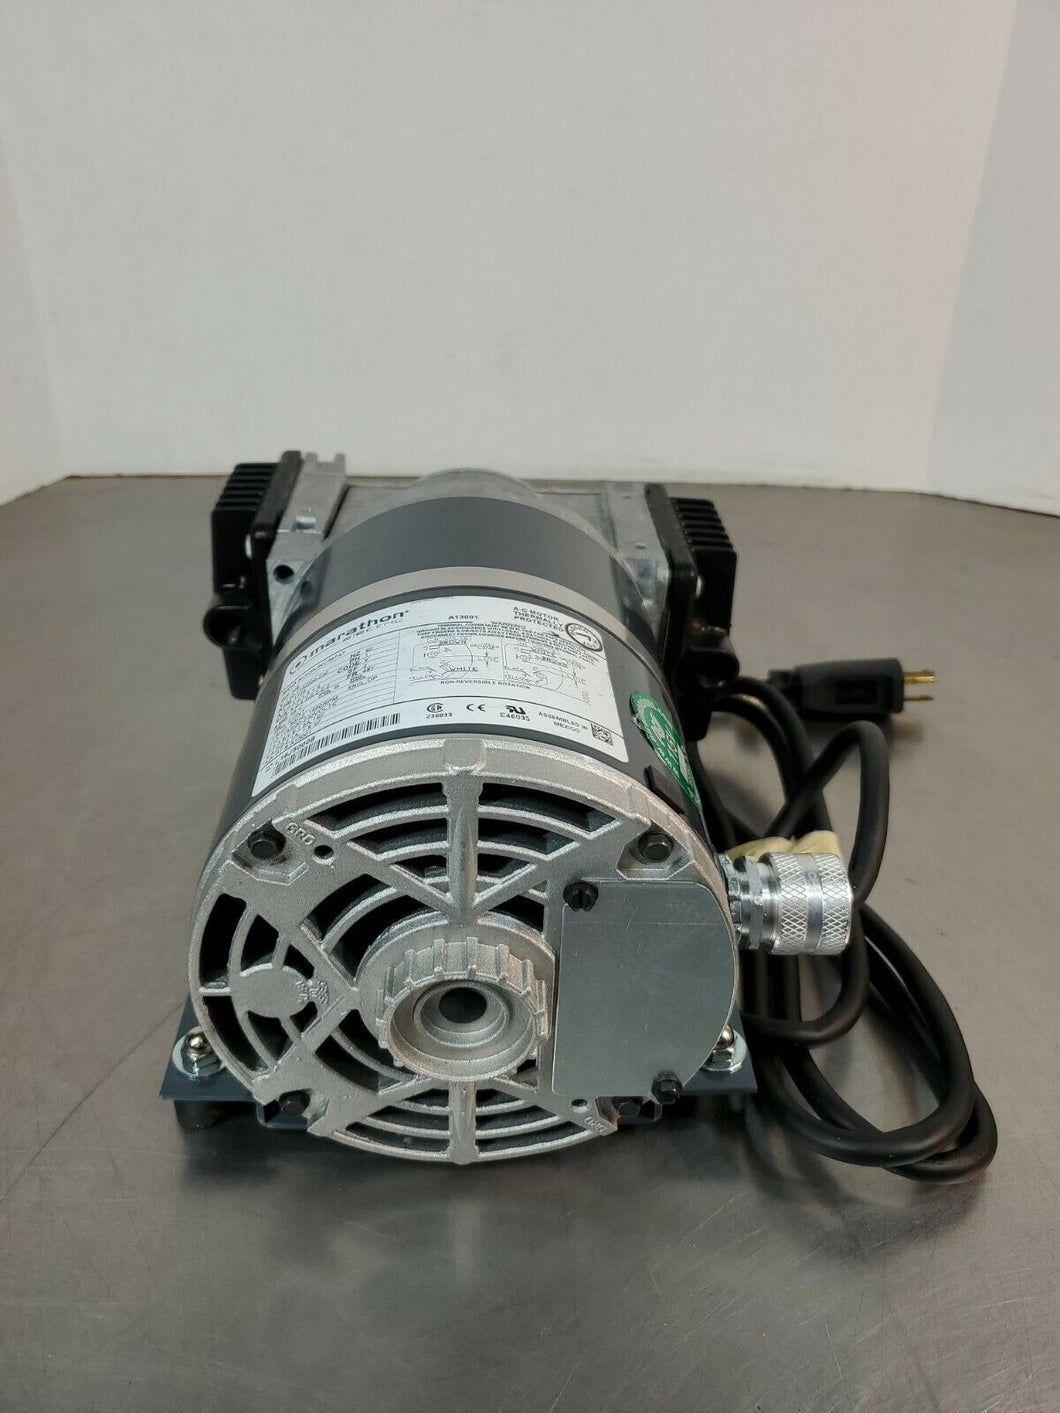 STI  11-6065 Pump + 5KH35JNC397AT  Motor 1/8 HP 1450 RPM  1PH.      1E